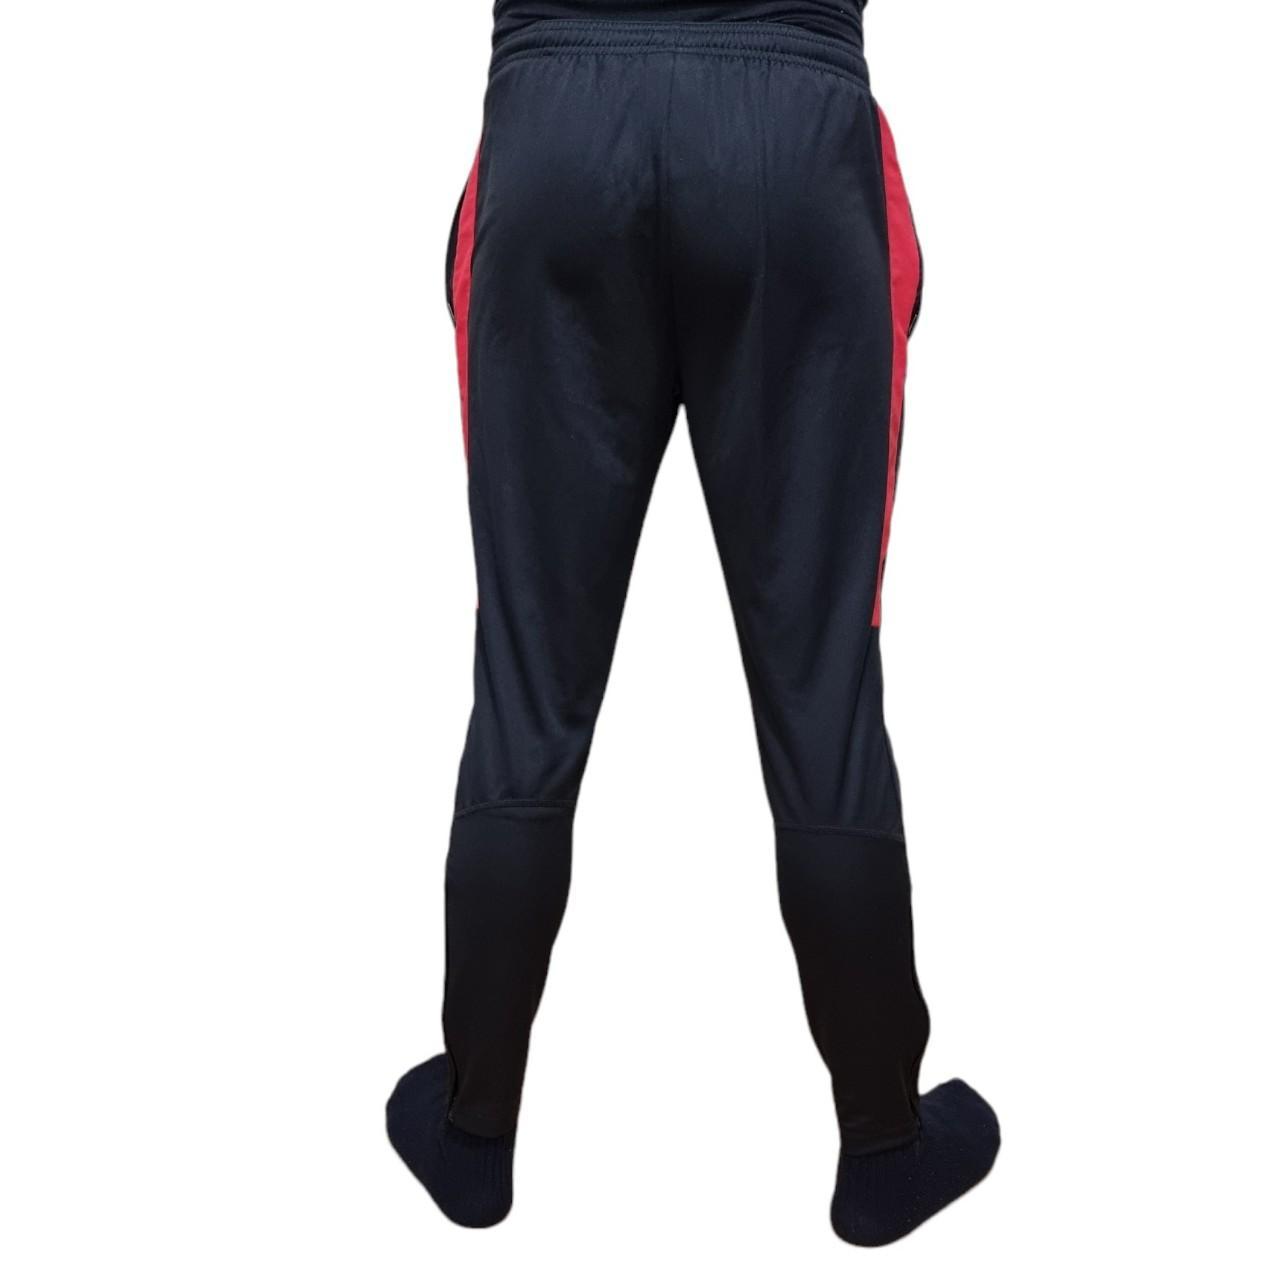 Nike Dri-FIT joggers / sweatpants - Black and... - Depop